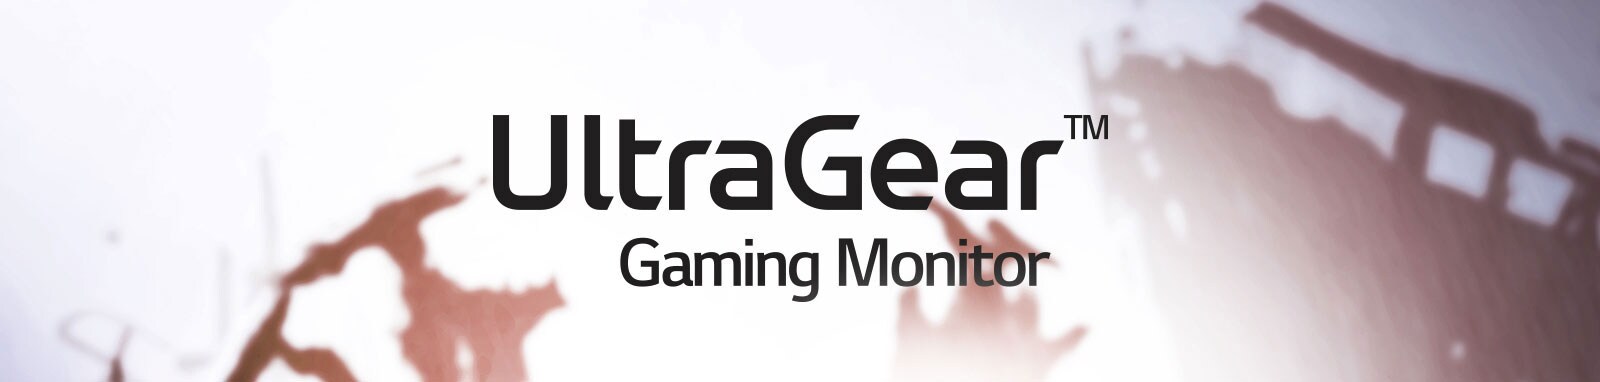 MNT-UltraGear-24GL600F-01-UltraGear-Desktop-new-